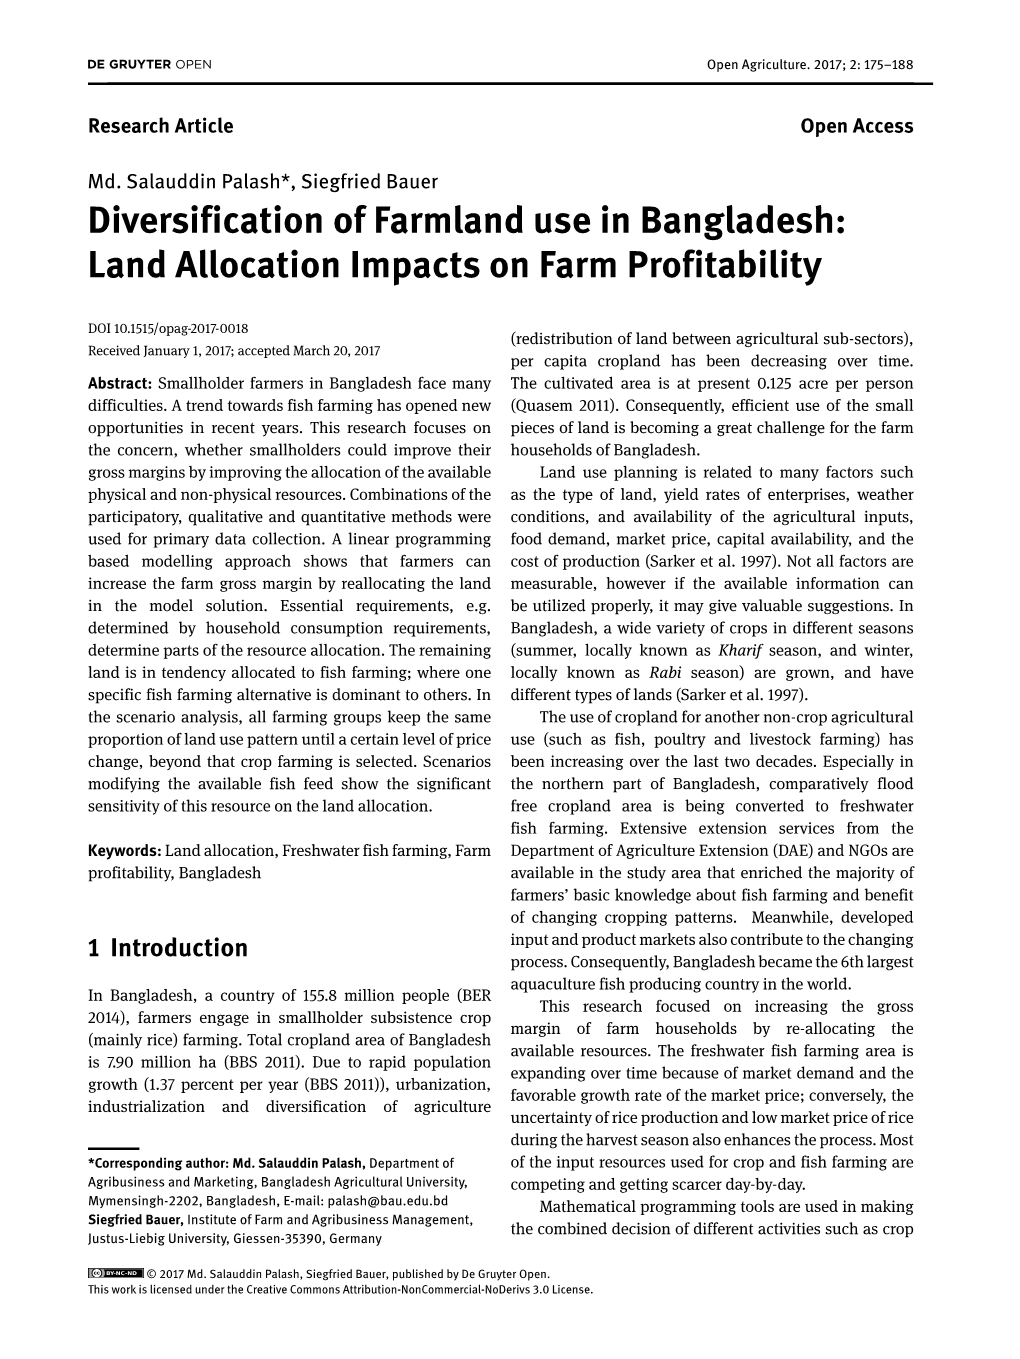 Diversification of Farmland Use in Bangladesh: Land Allocation Impacts on Farm Profitability